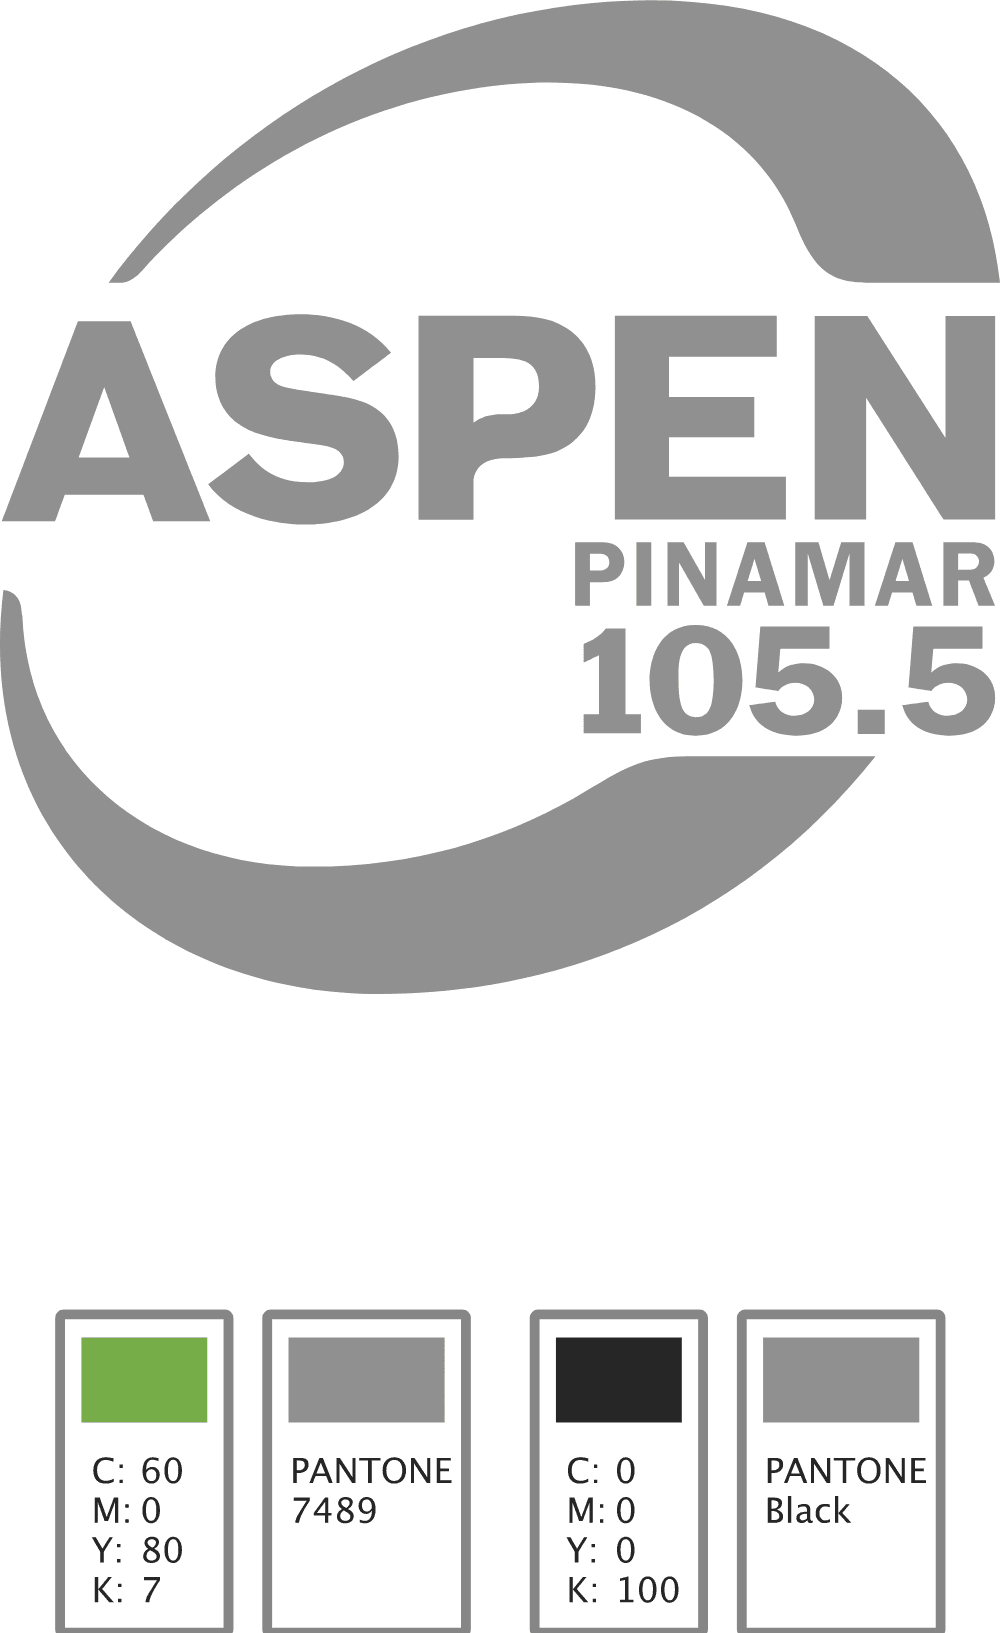 Aspen Pinamar Logo download